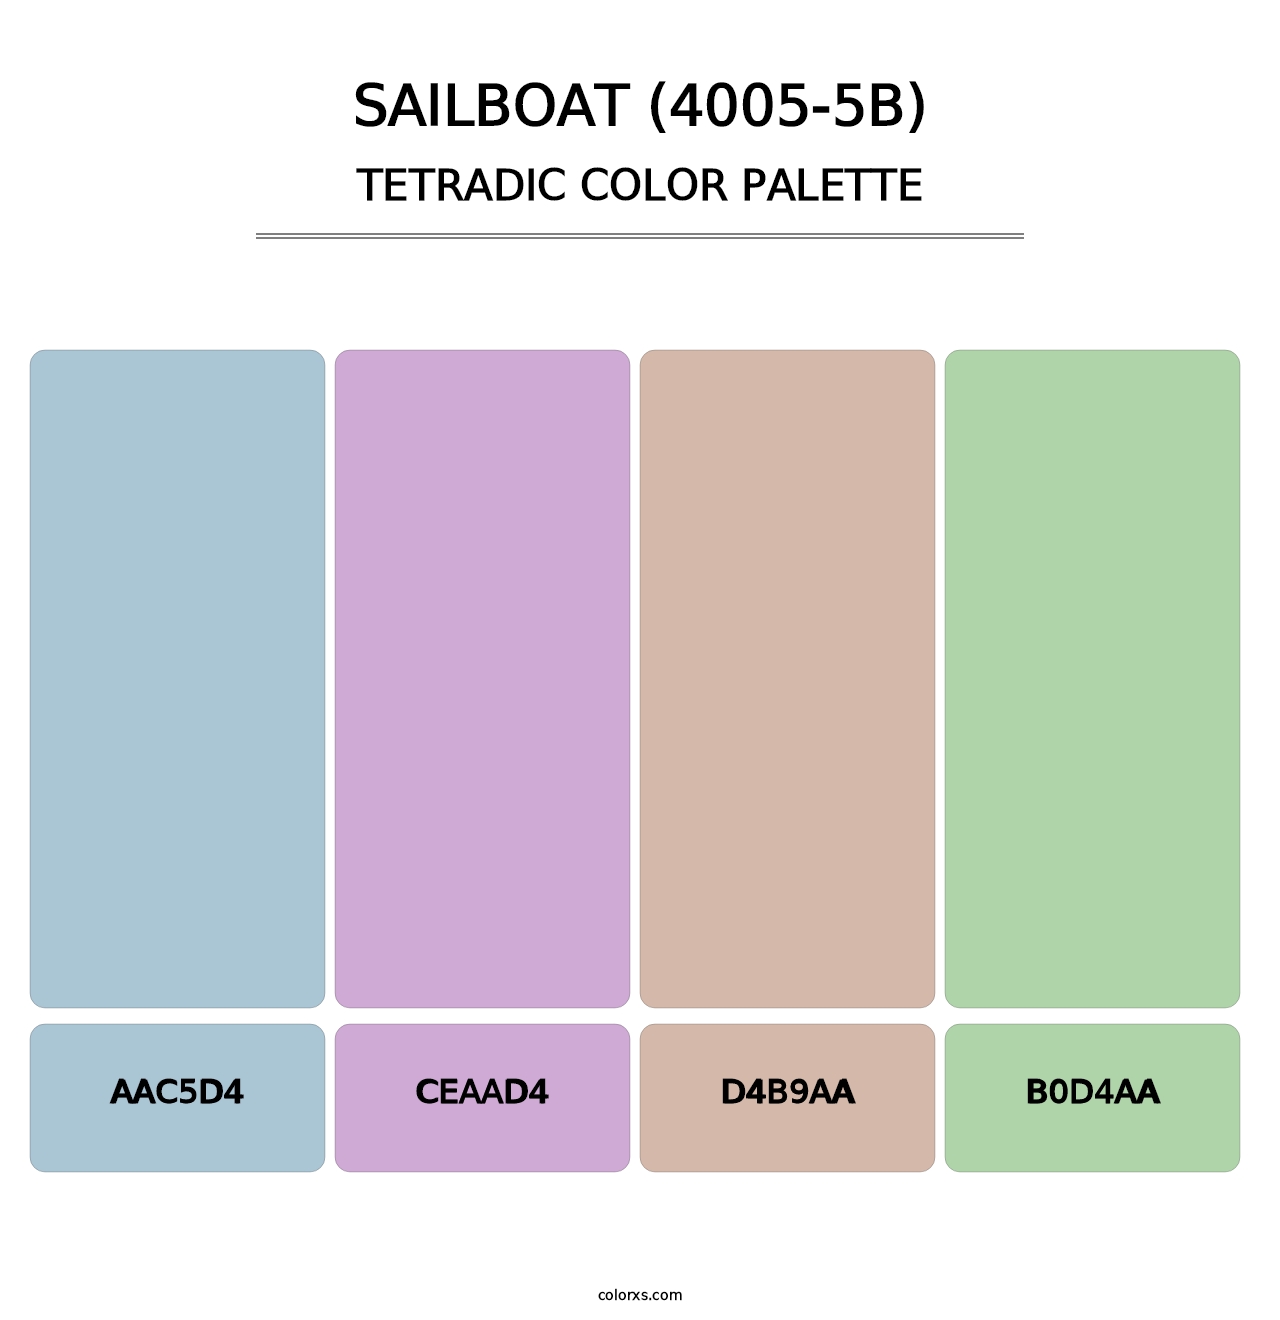 Sailboat (4005-5B) - Tetradic Color Palette